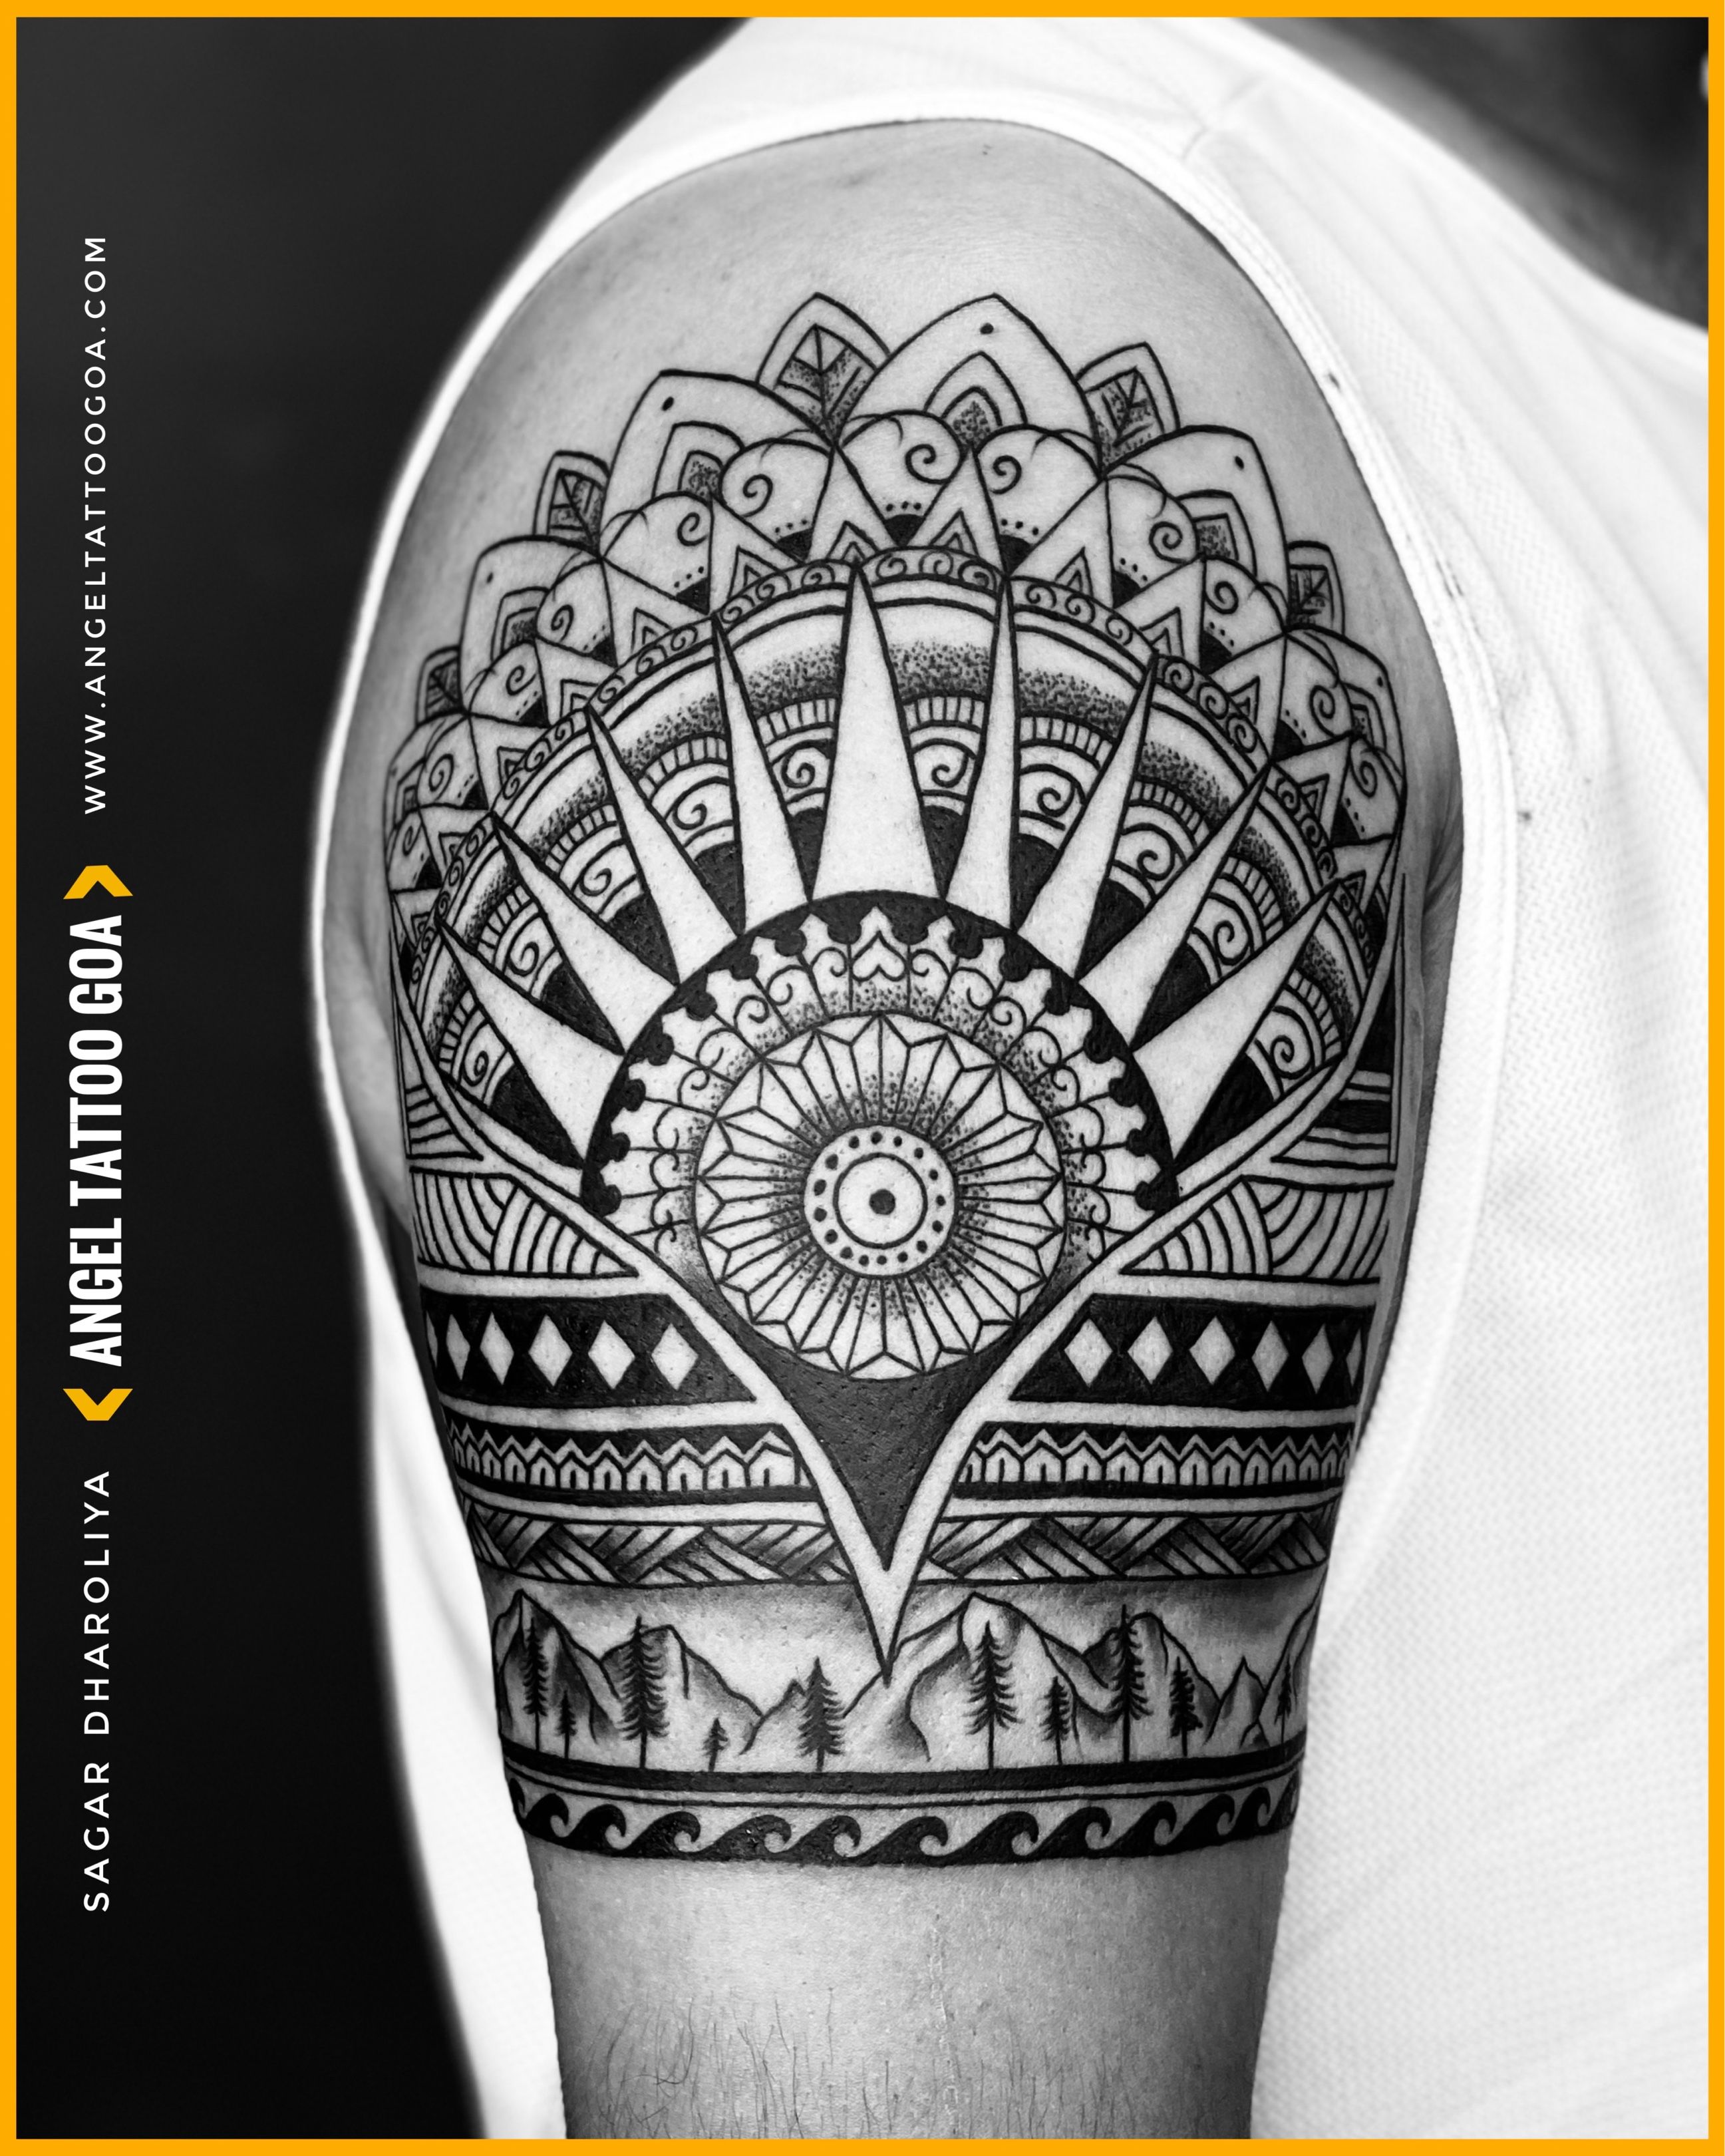 King Crown Tattoo Studio Best Tattoo Artist Goa Goa One Of the Best Goa  calangute  Tattoo shop in Calangute India  TopRatedOnline